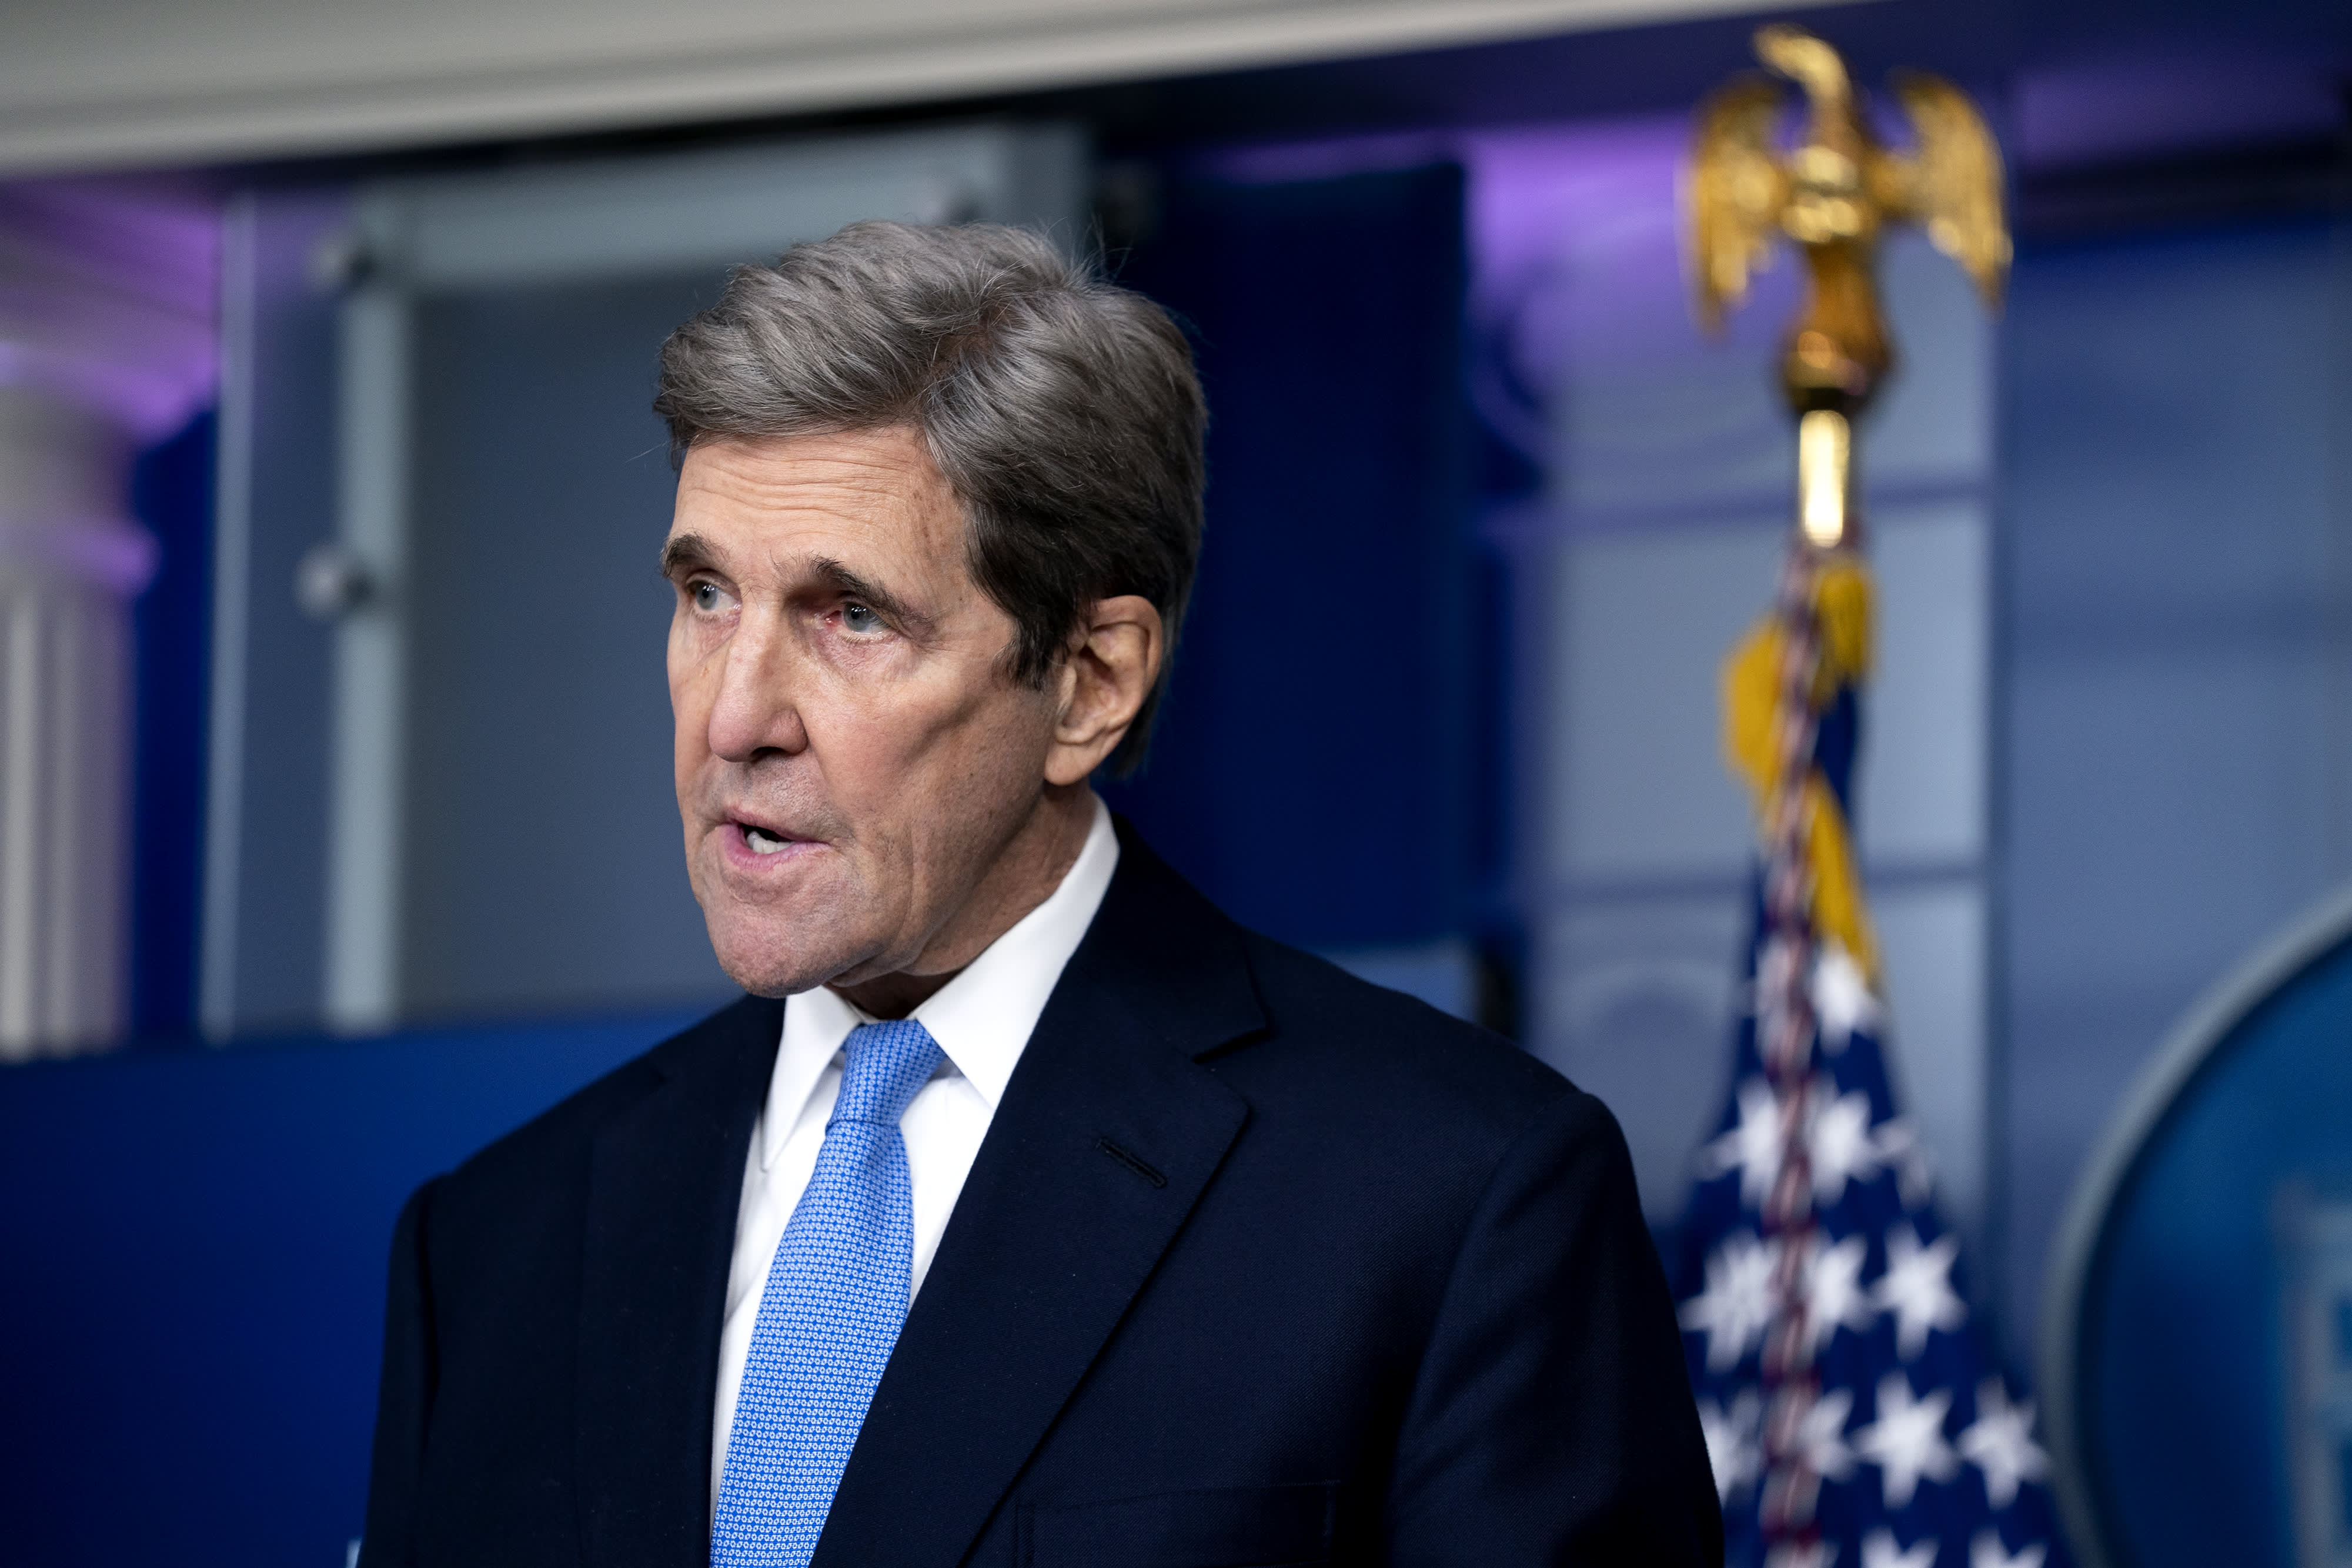 Biden’s climate plan is ‘no counterbalance to China’: John Kerry